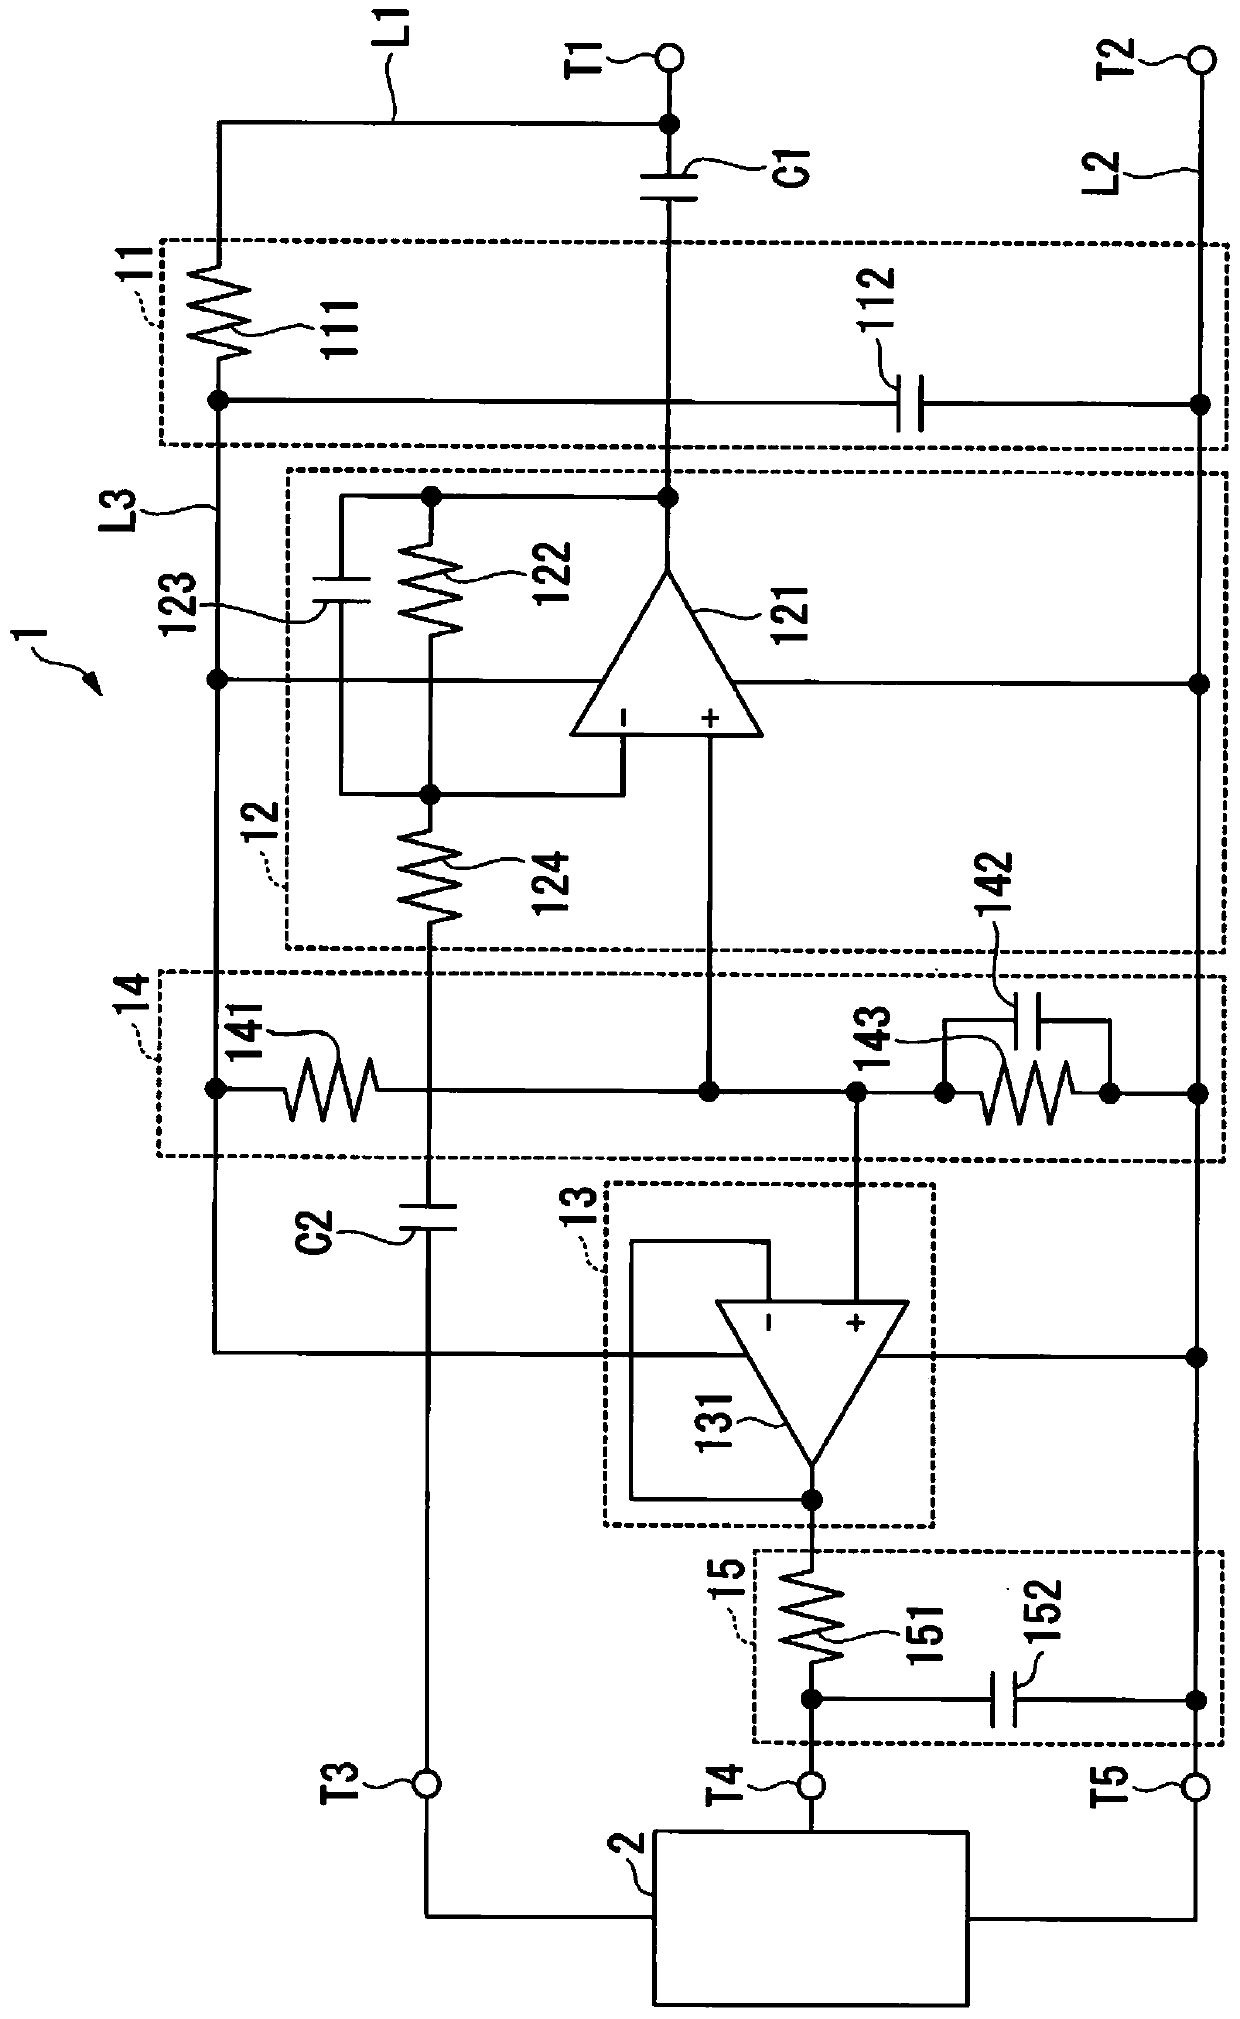 Signal transmission circuit and signal transmission method